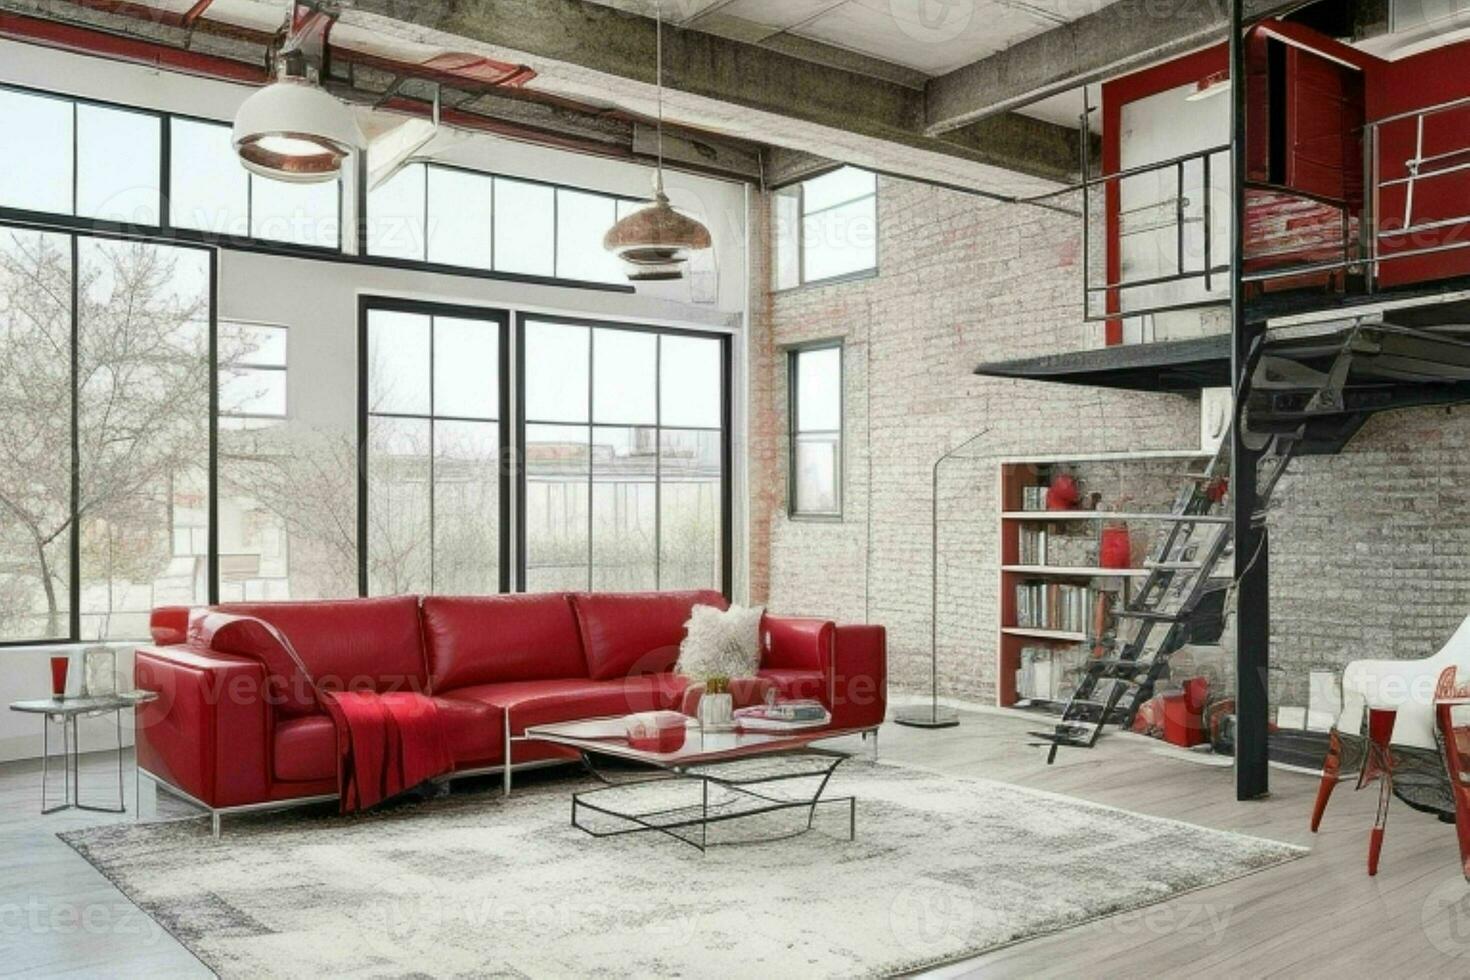 moderno industrial desván vivo habitación hogar interior. Pro foto